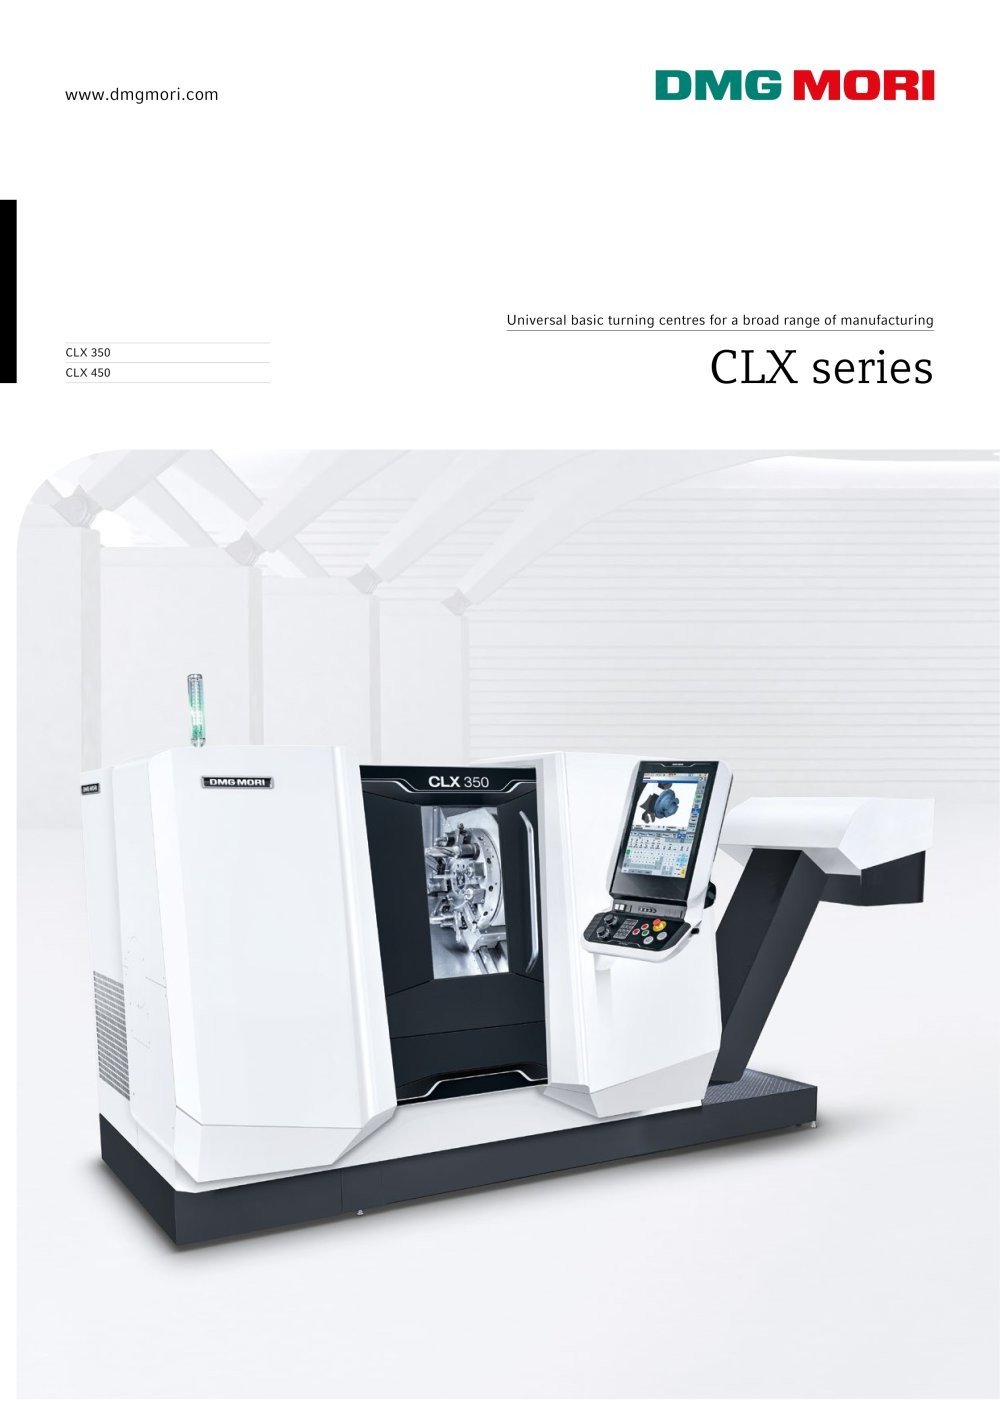 CLX SERIES DMG MORI PDF Catalogue Technical Documentation Pages Dmg